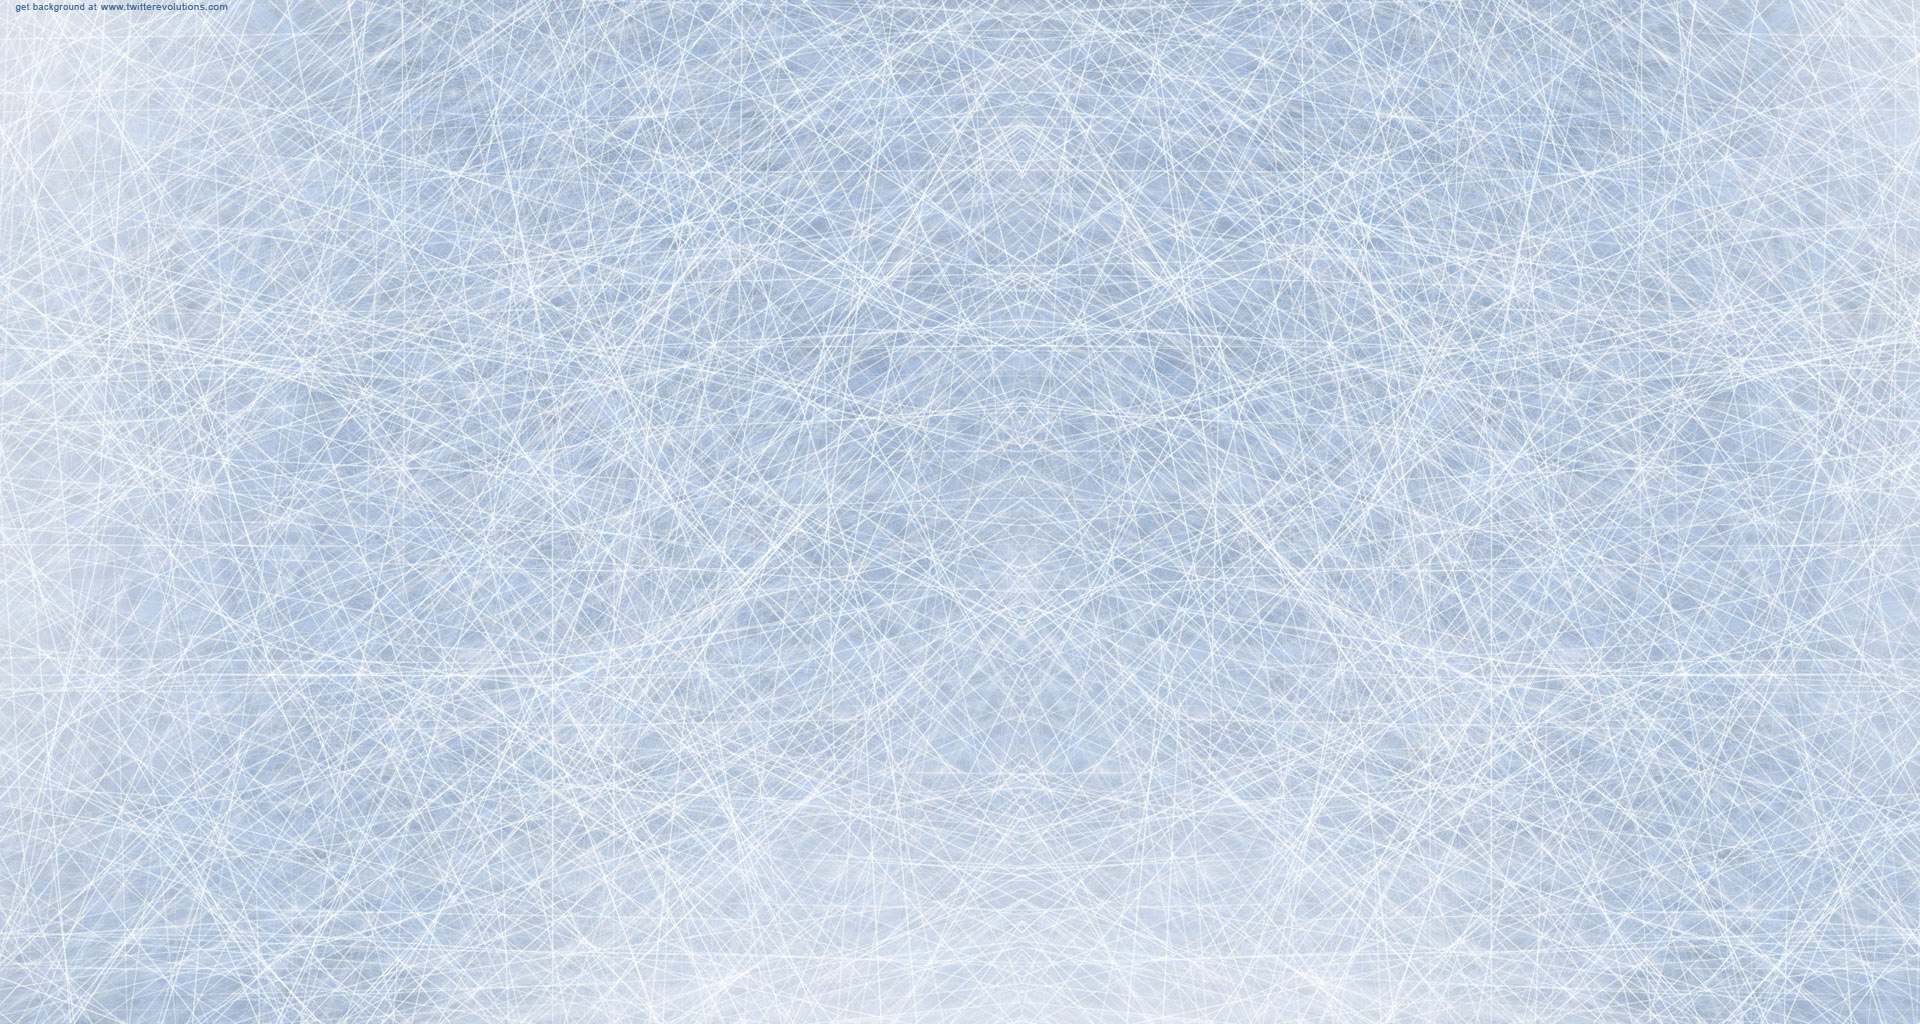 Обложки для клипов о сборниках - Страница 3 Ice-hockey-twitter-background